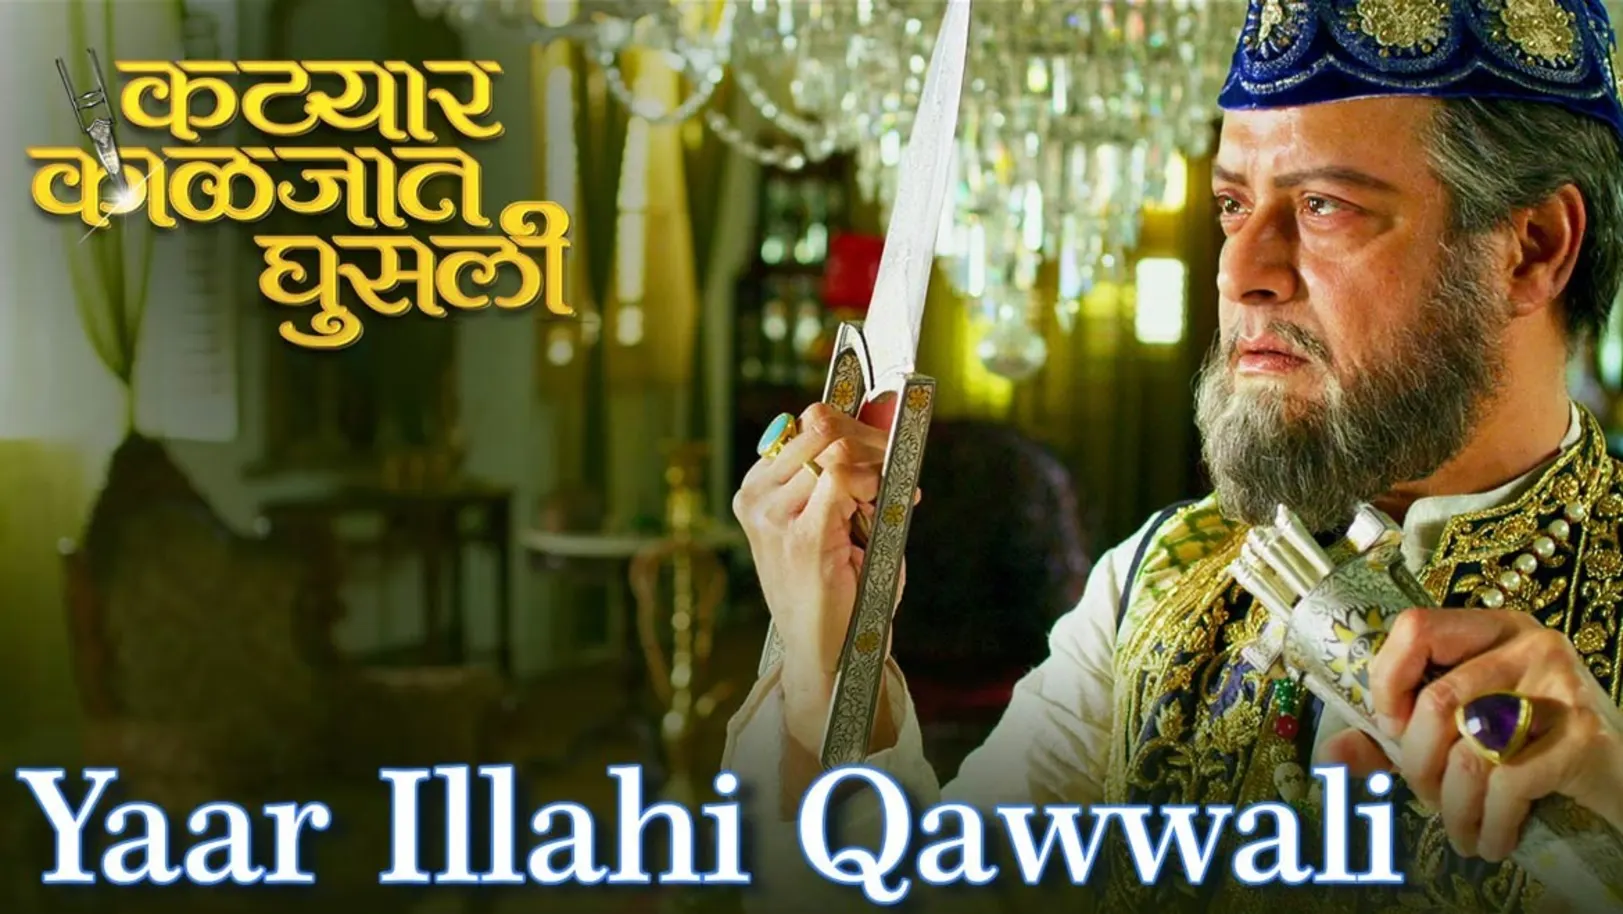 Yaar Illahi (Qawwali) - Katyar Kaljat Ghusli | Sachin Pilgaonkar | Shankar Mahadevan 